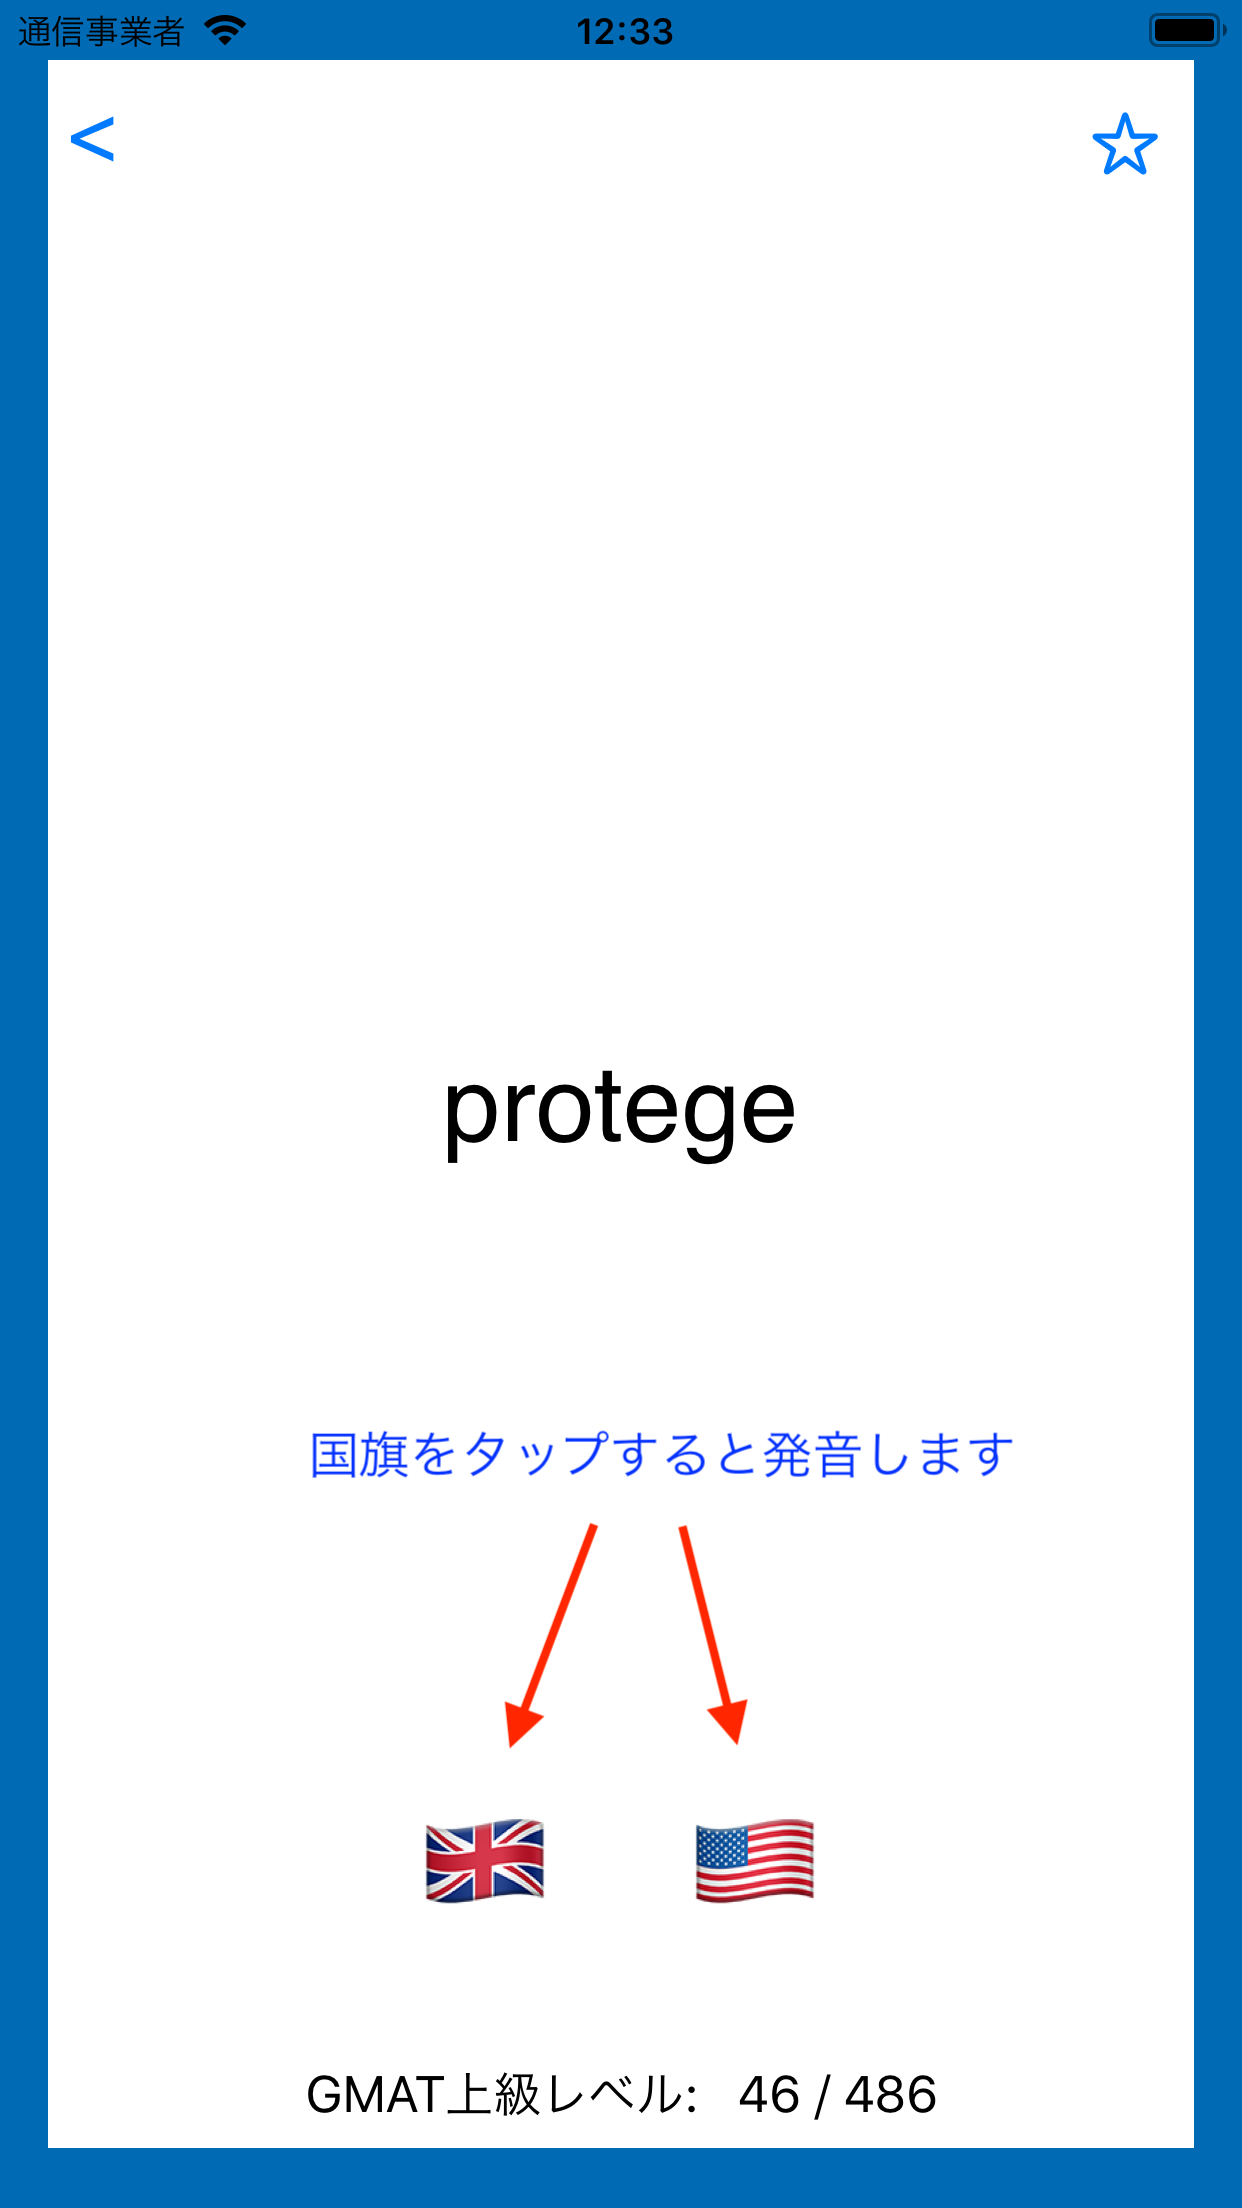 Gmat 単語帳アプリをリリースしました アゴス ジャパン Gmat 講師 中山道生ブログ